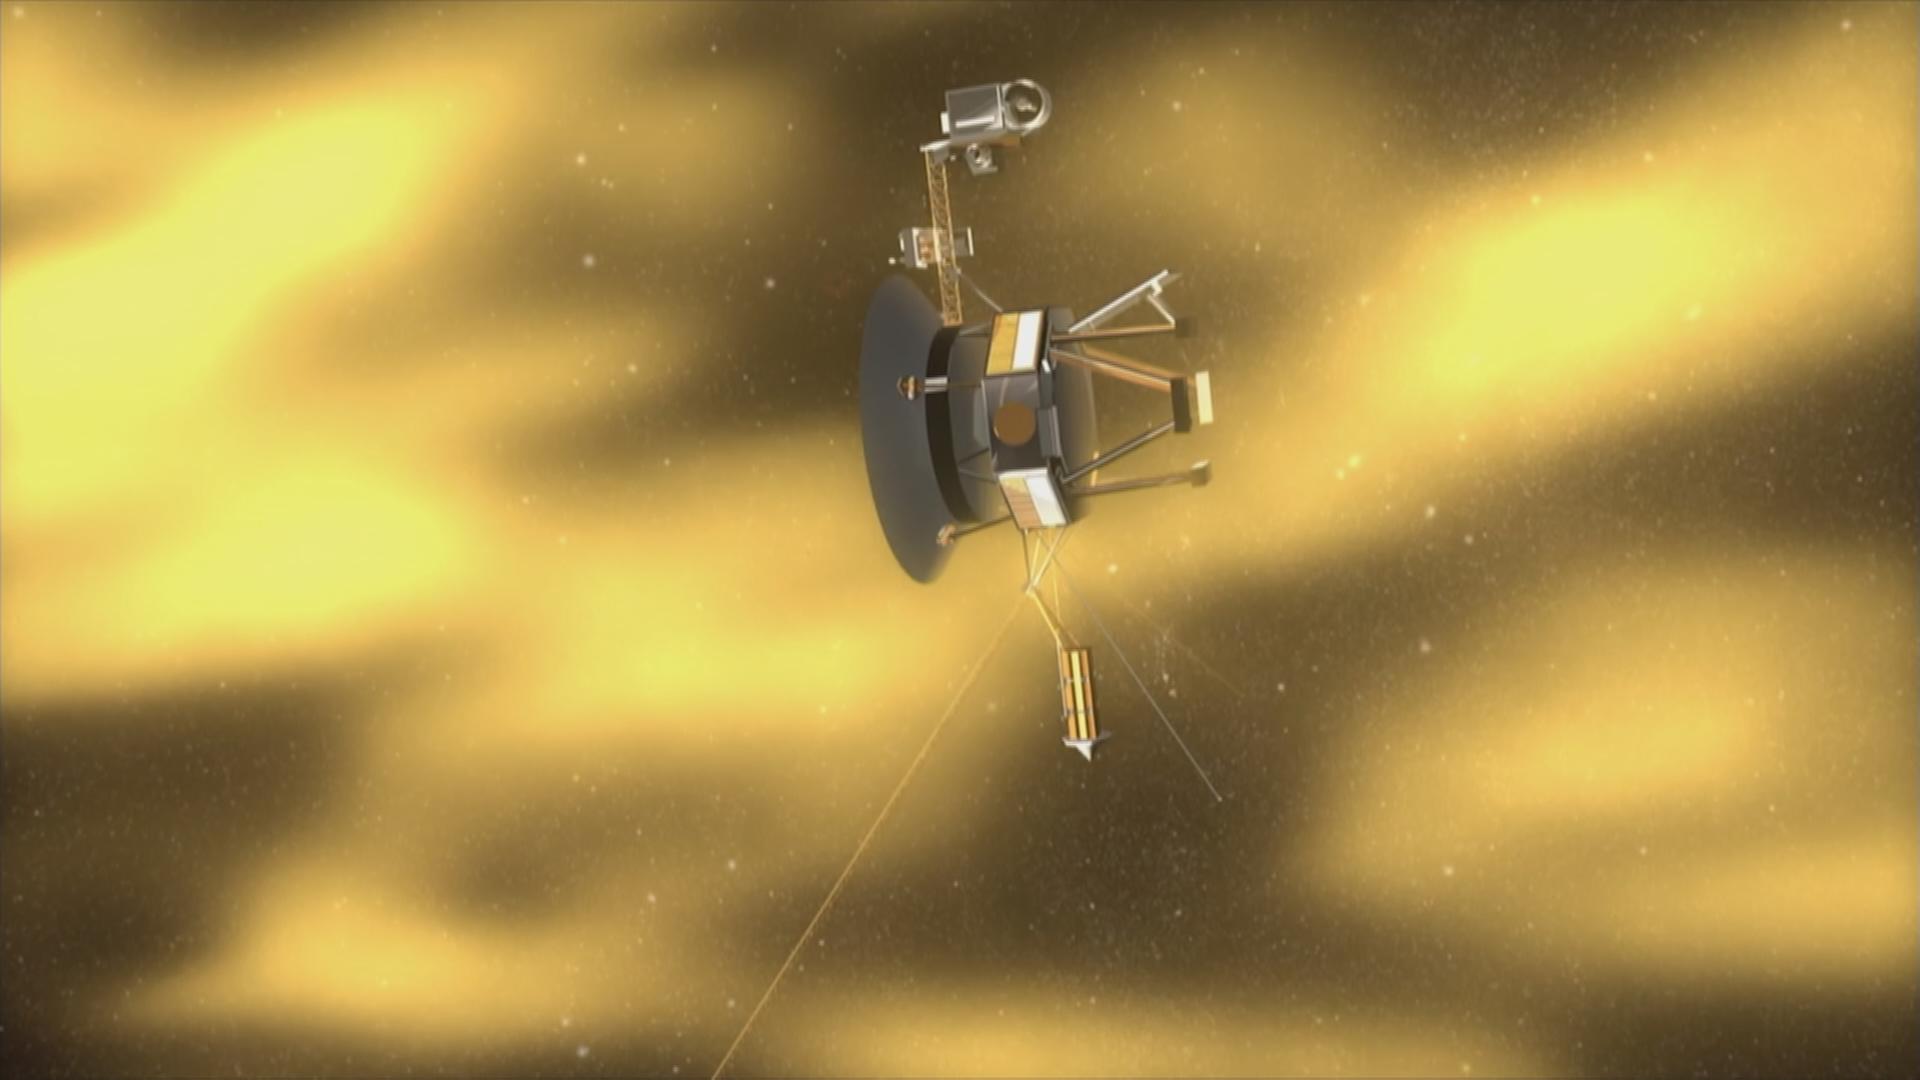 Voyager1